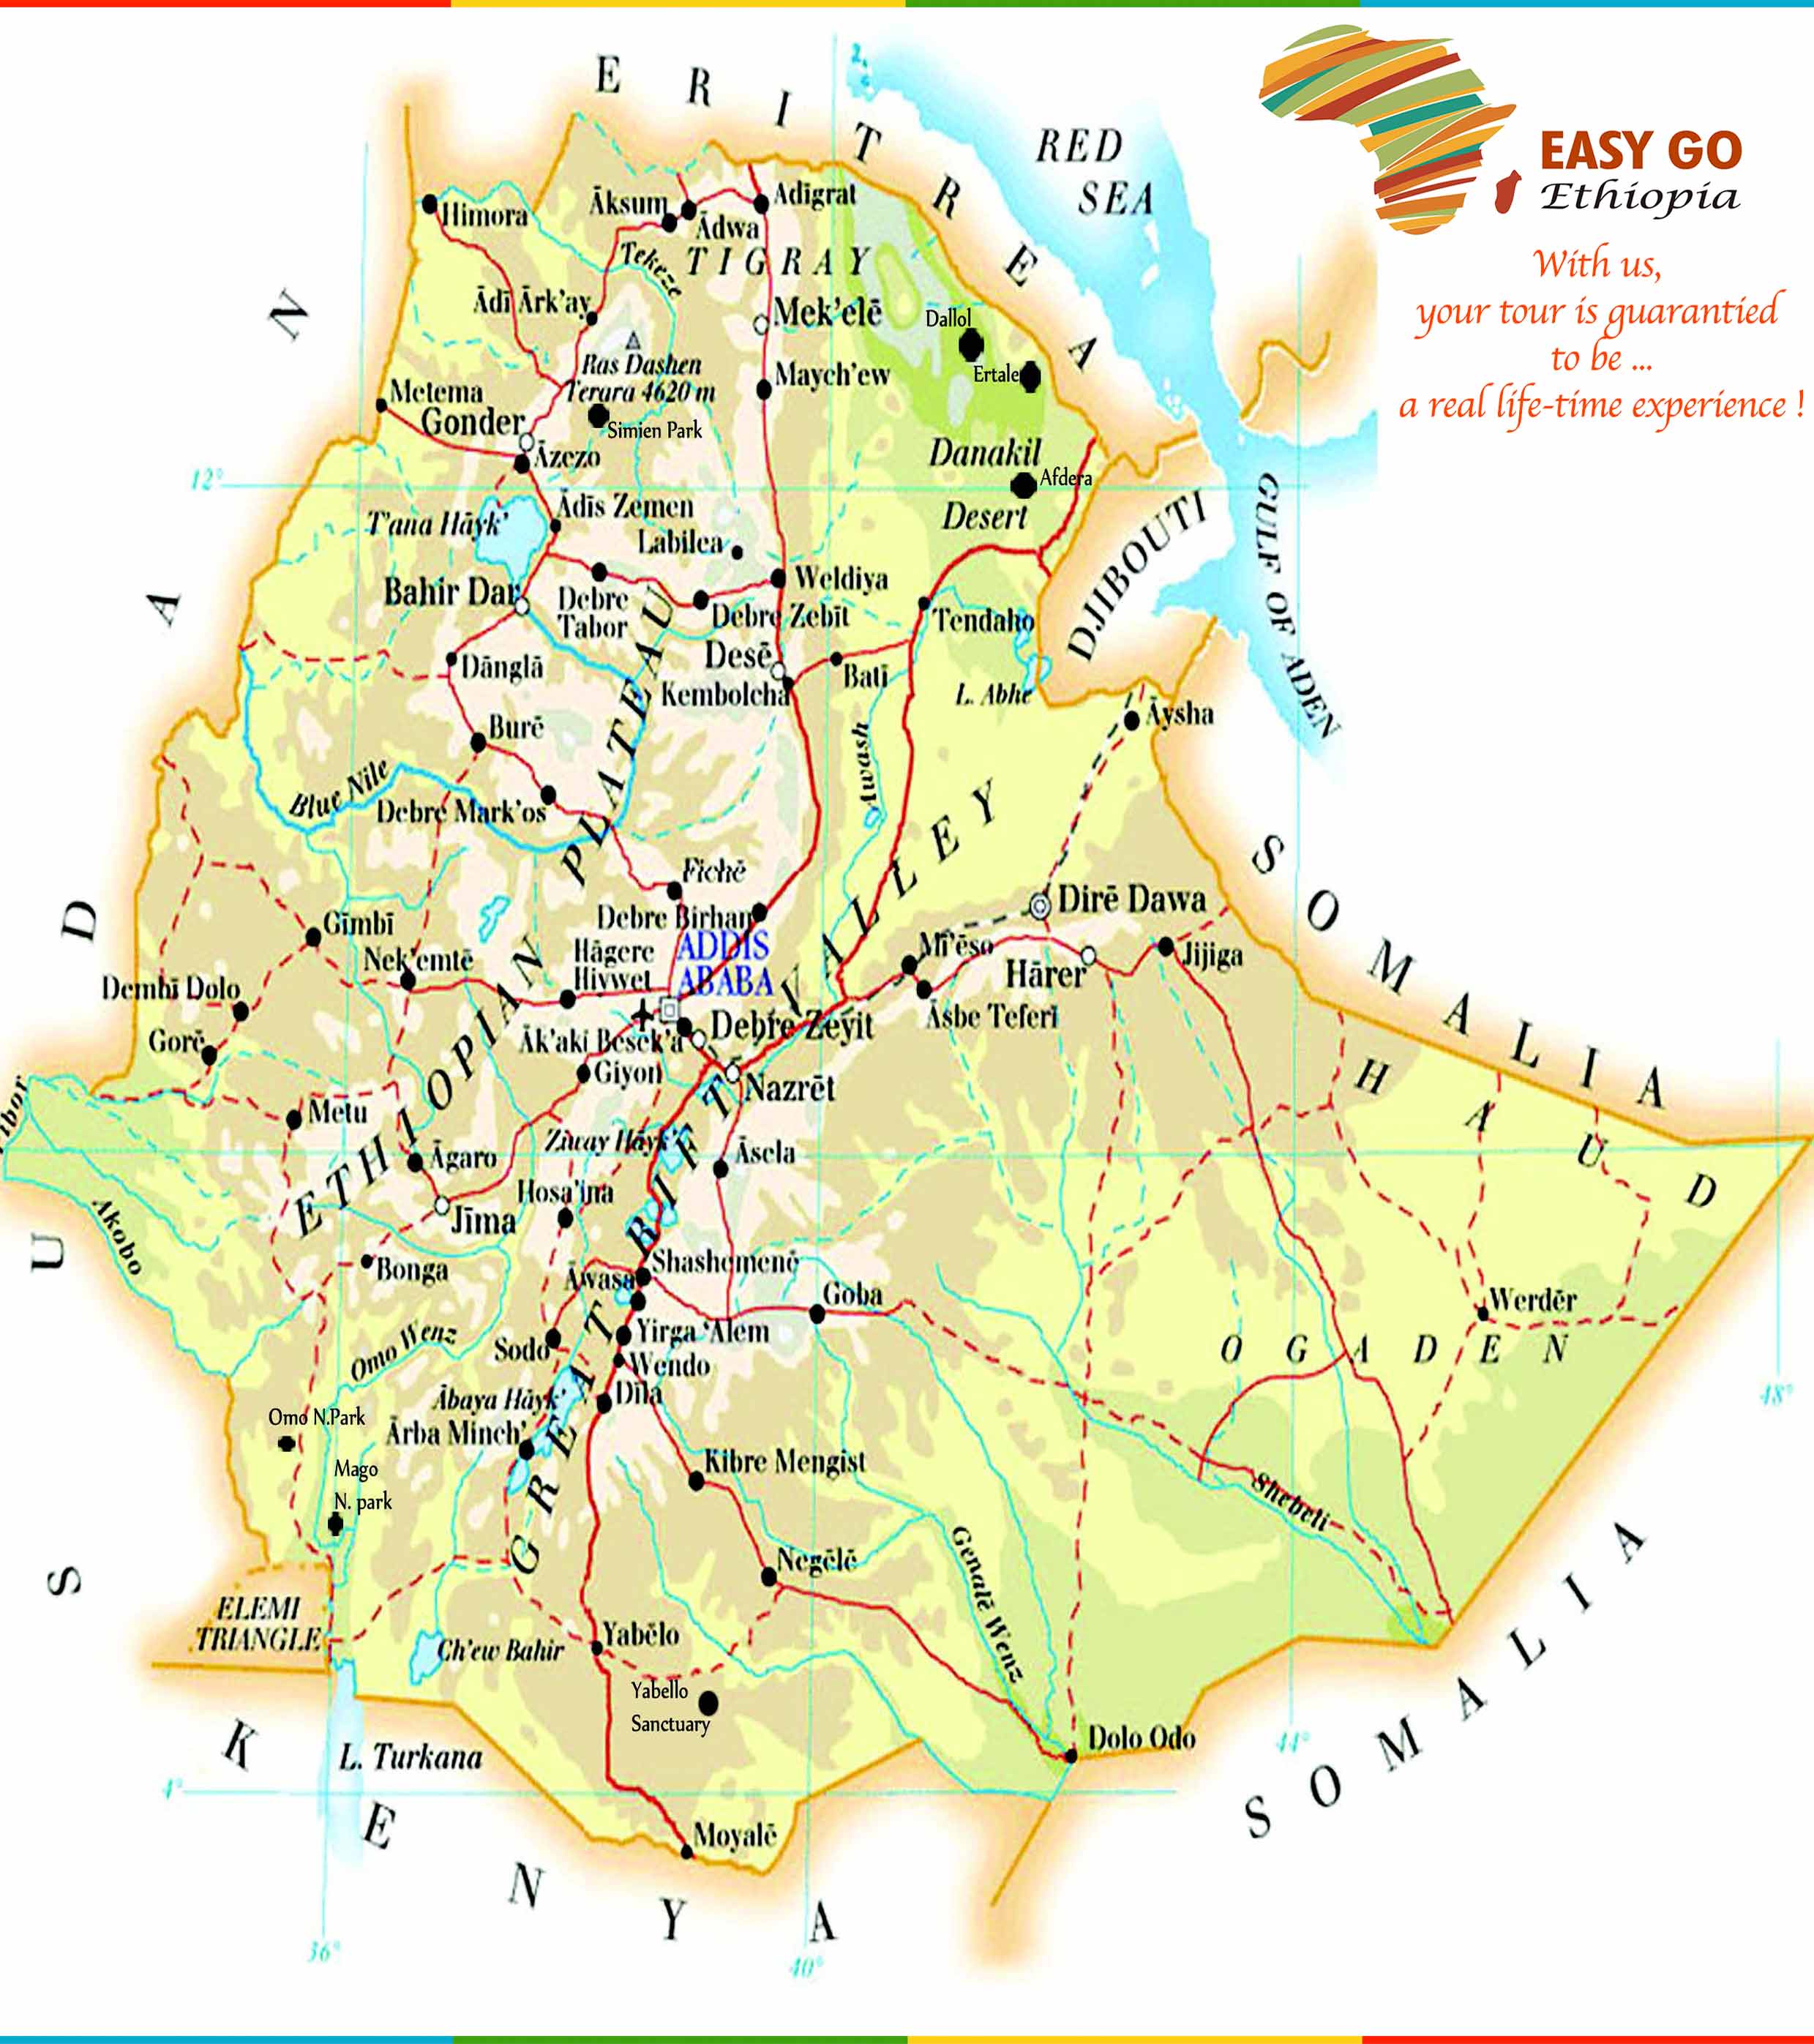 ethiopian_map_easygo_ethiopia